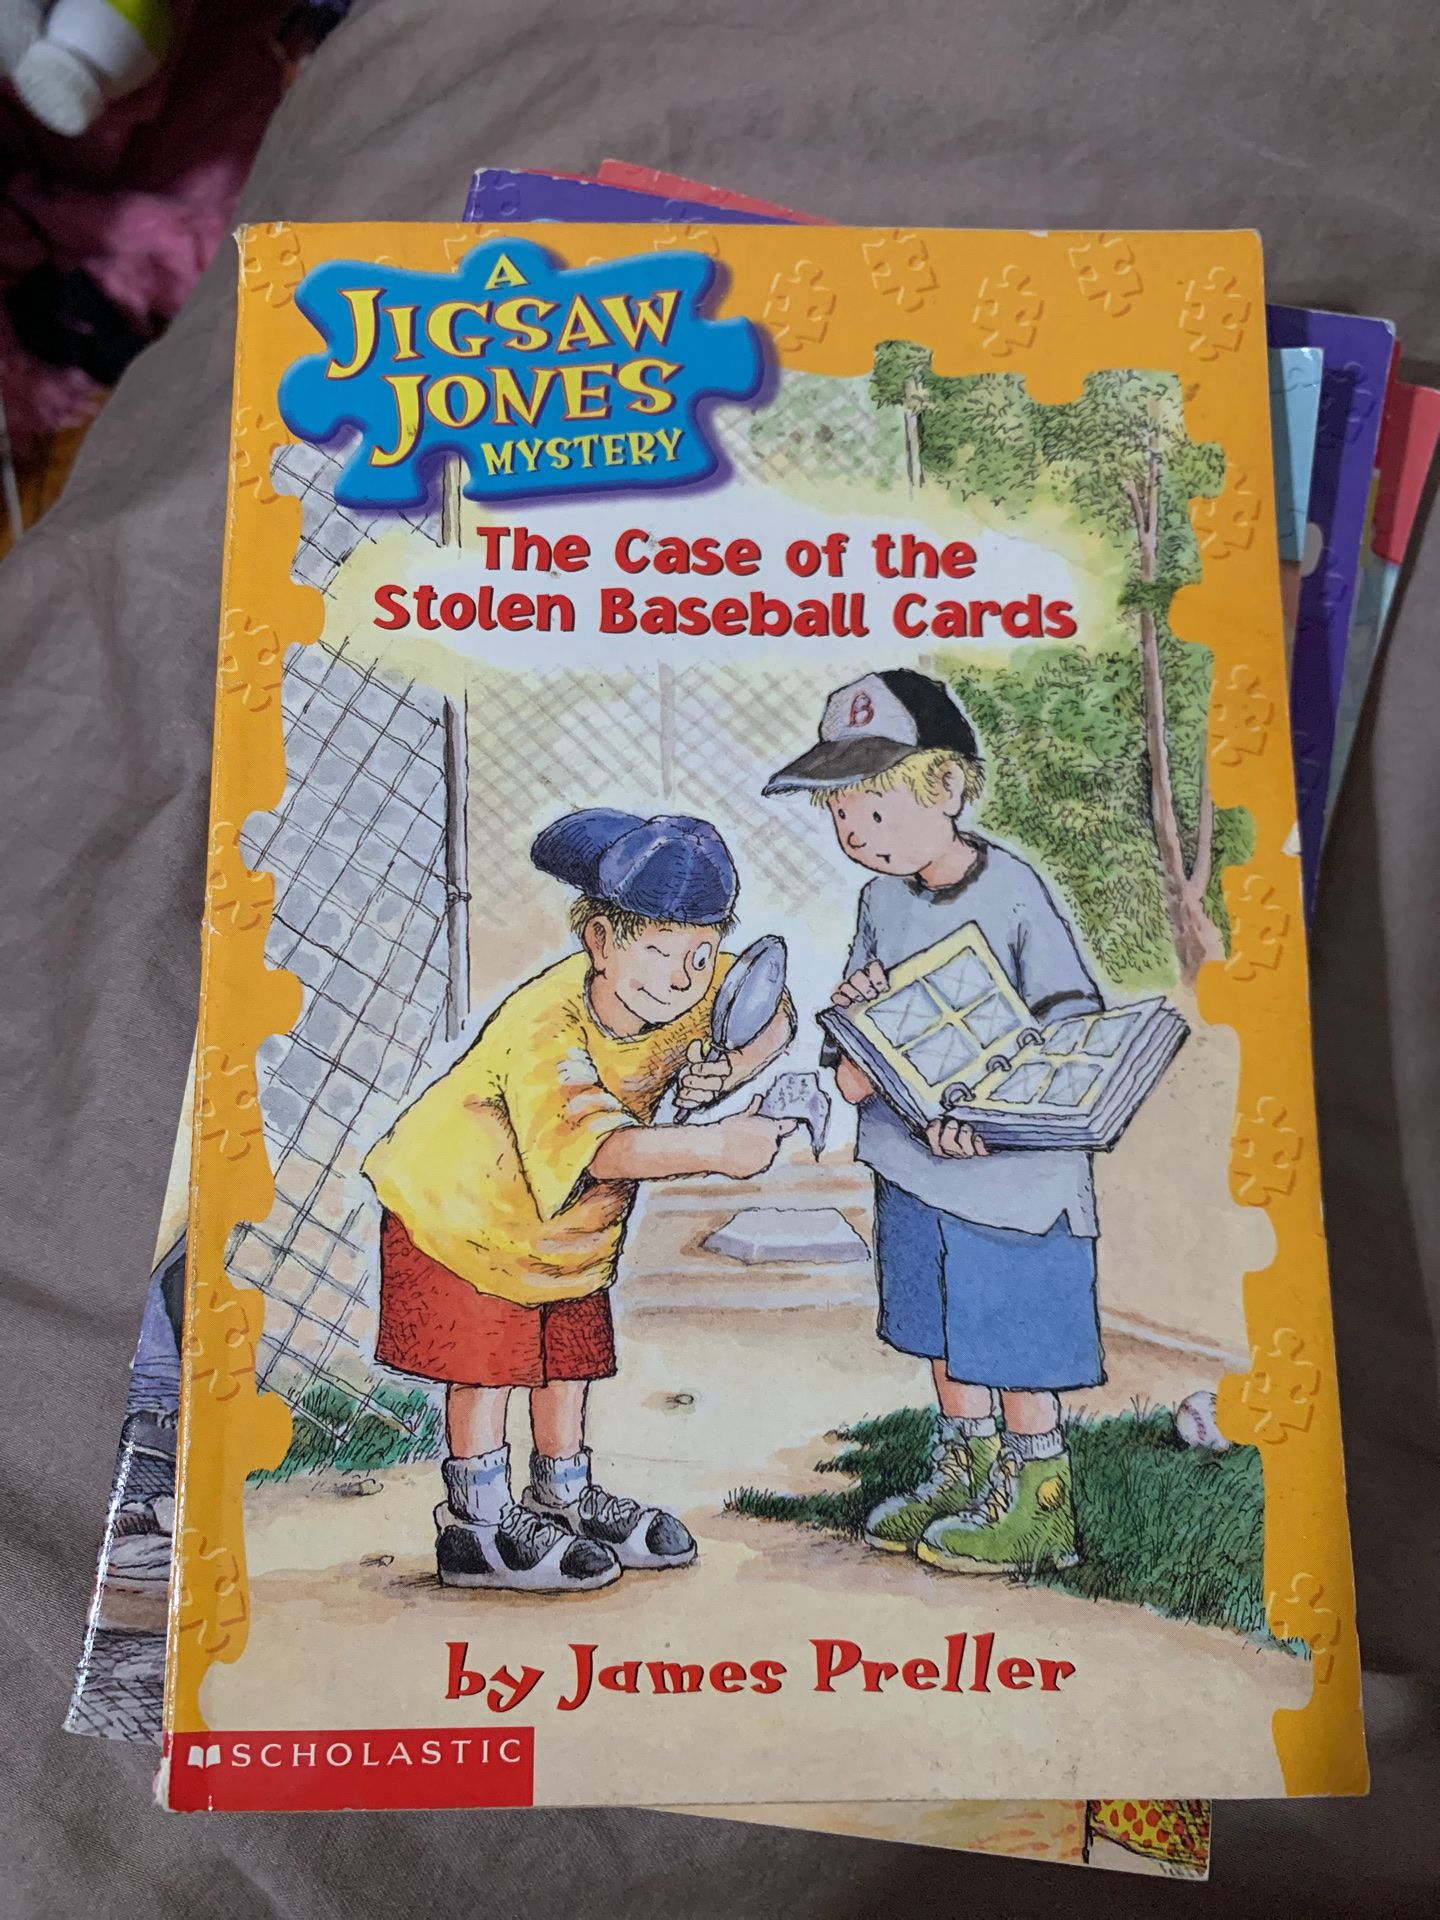 Jigsaw Jones book